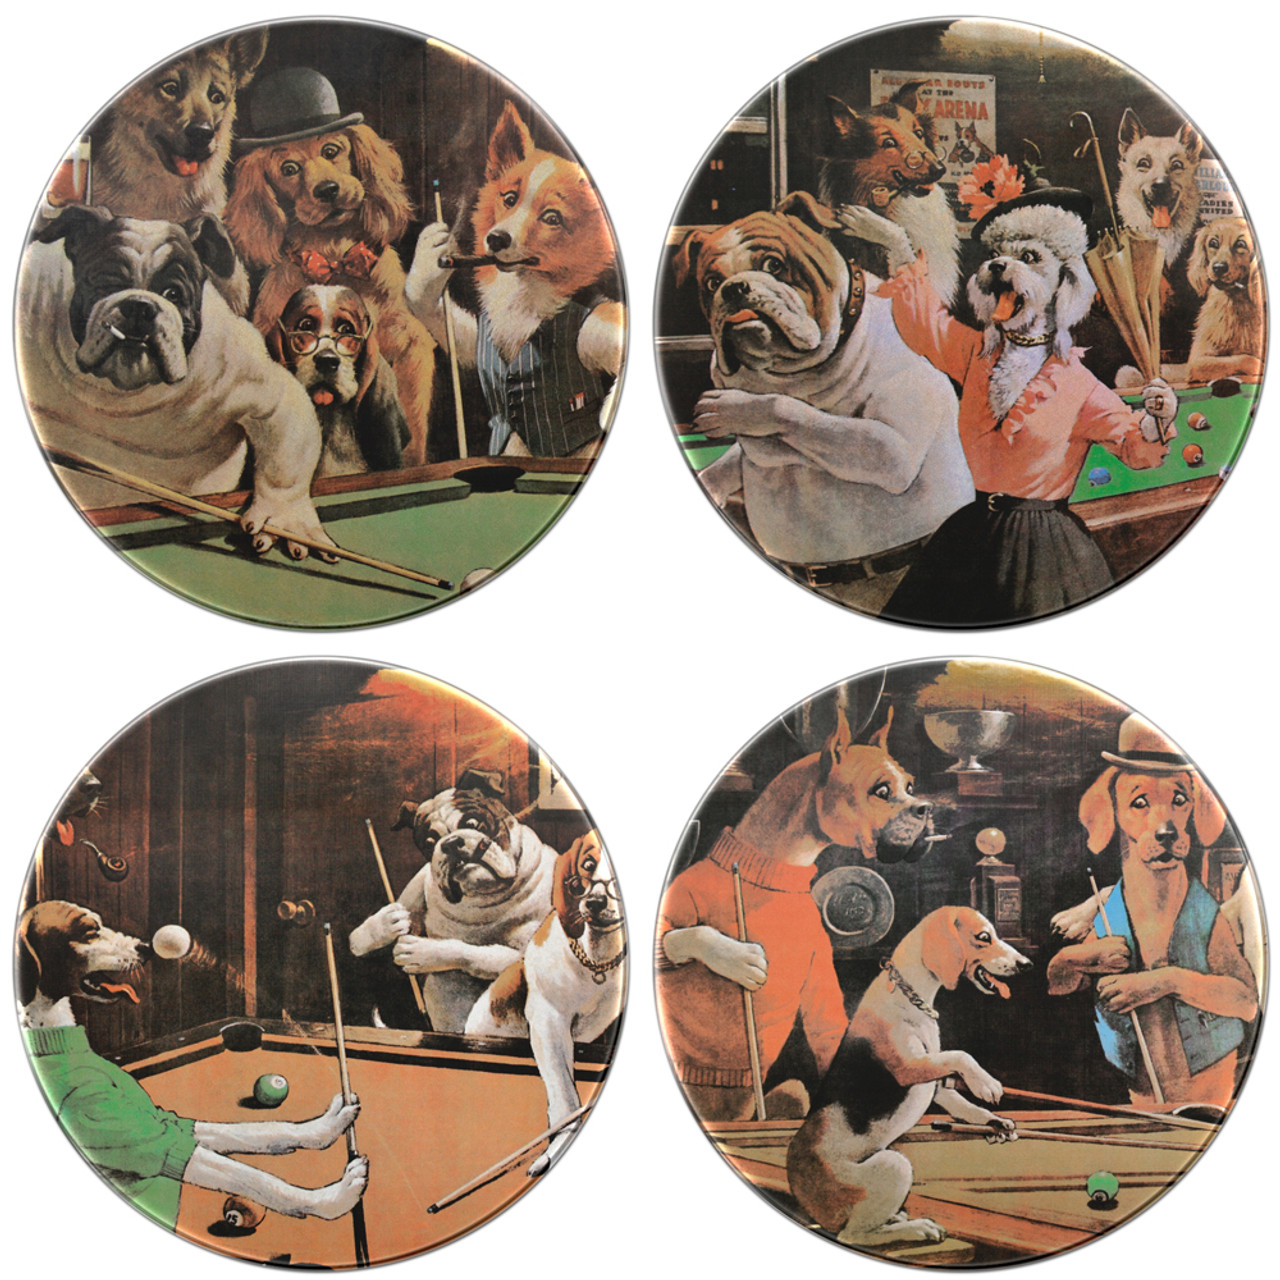 Coaster Set - "Dogs Playing Pool"